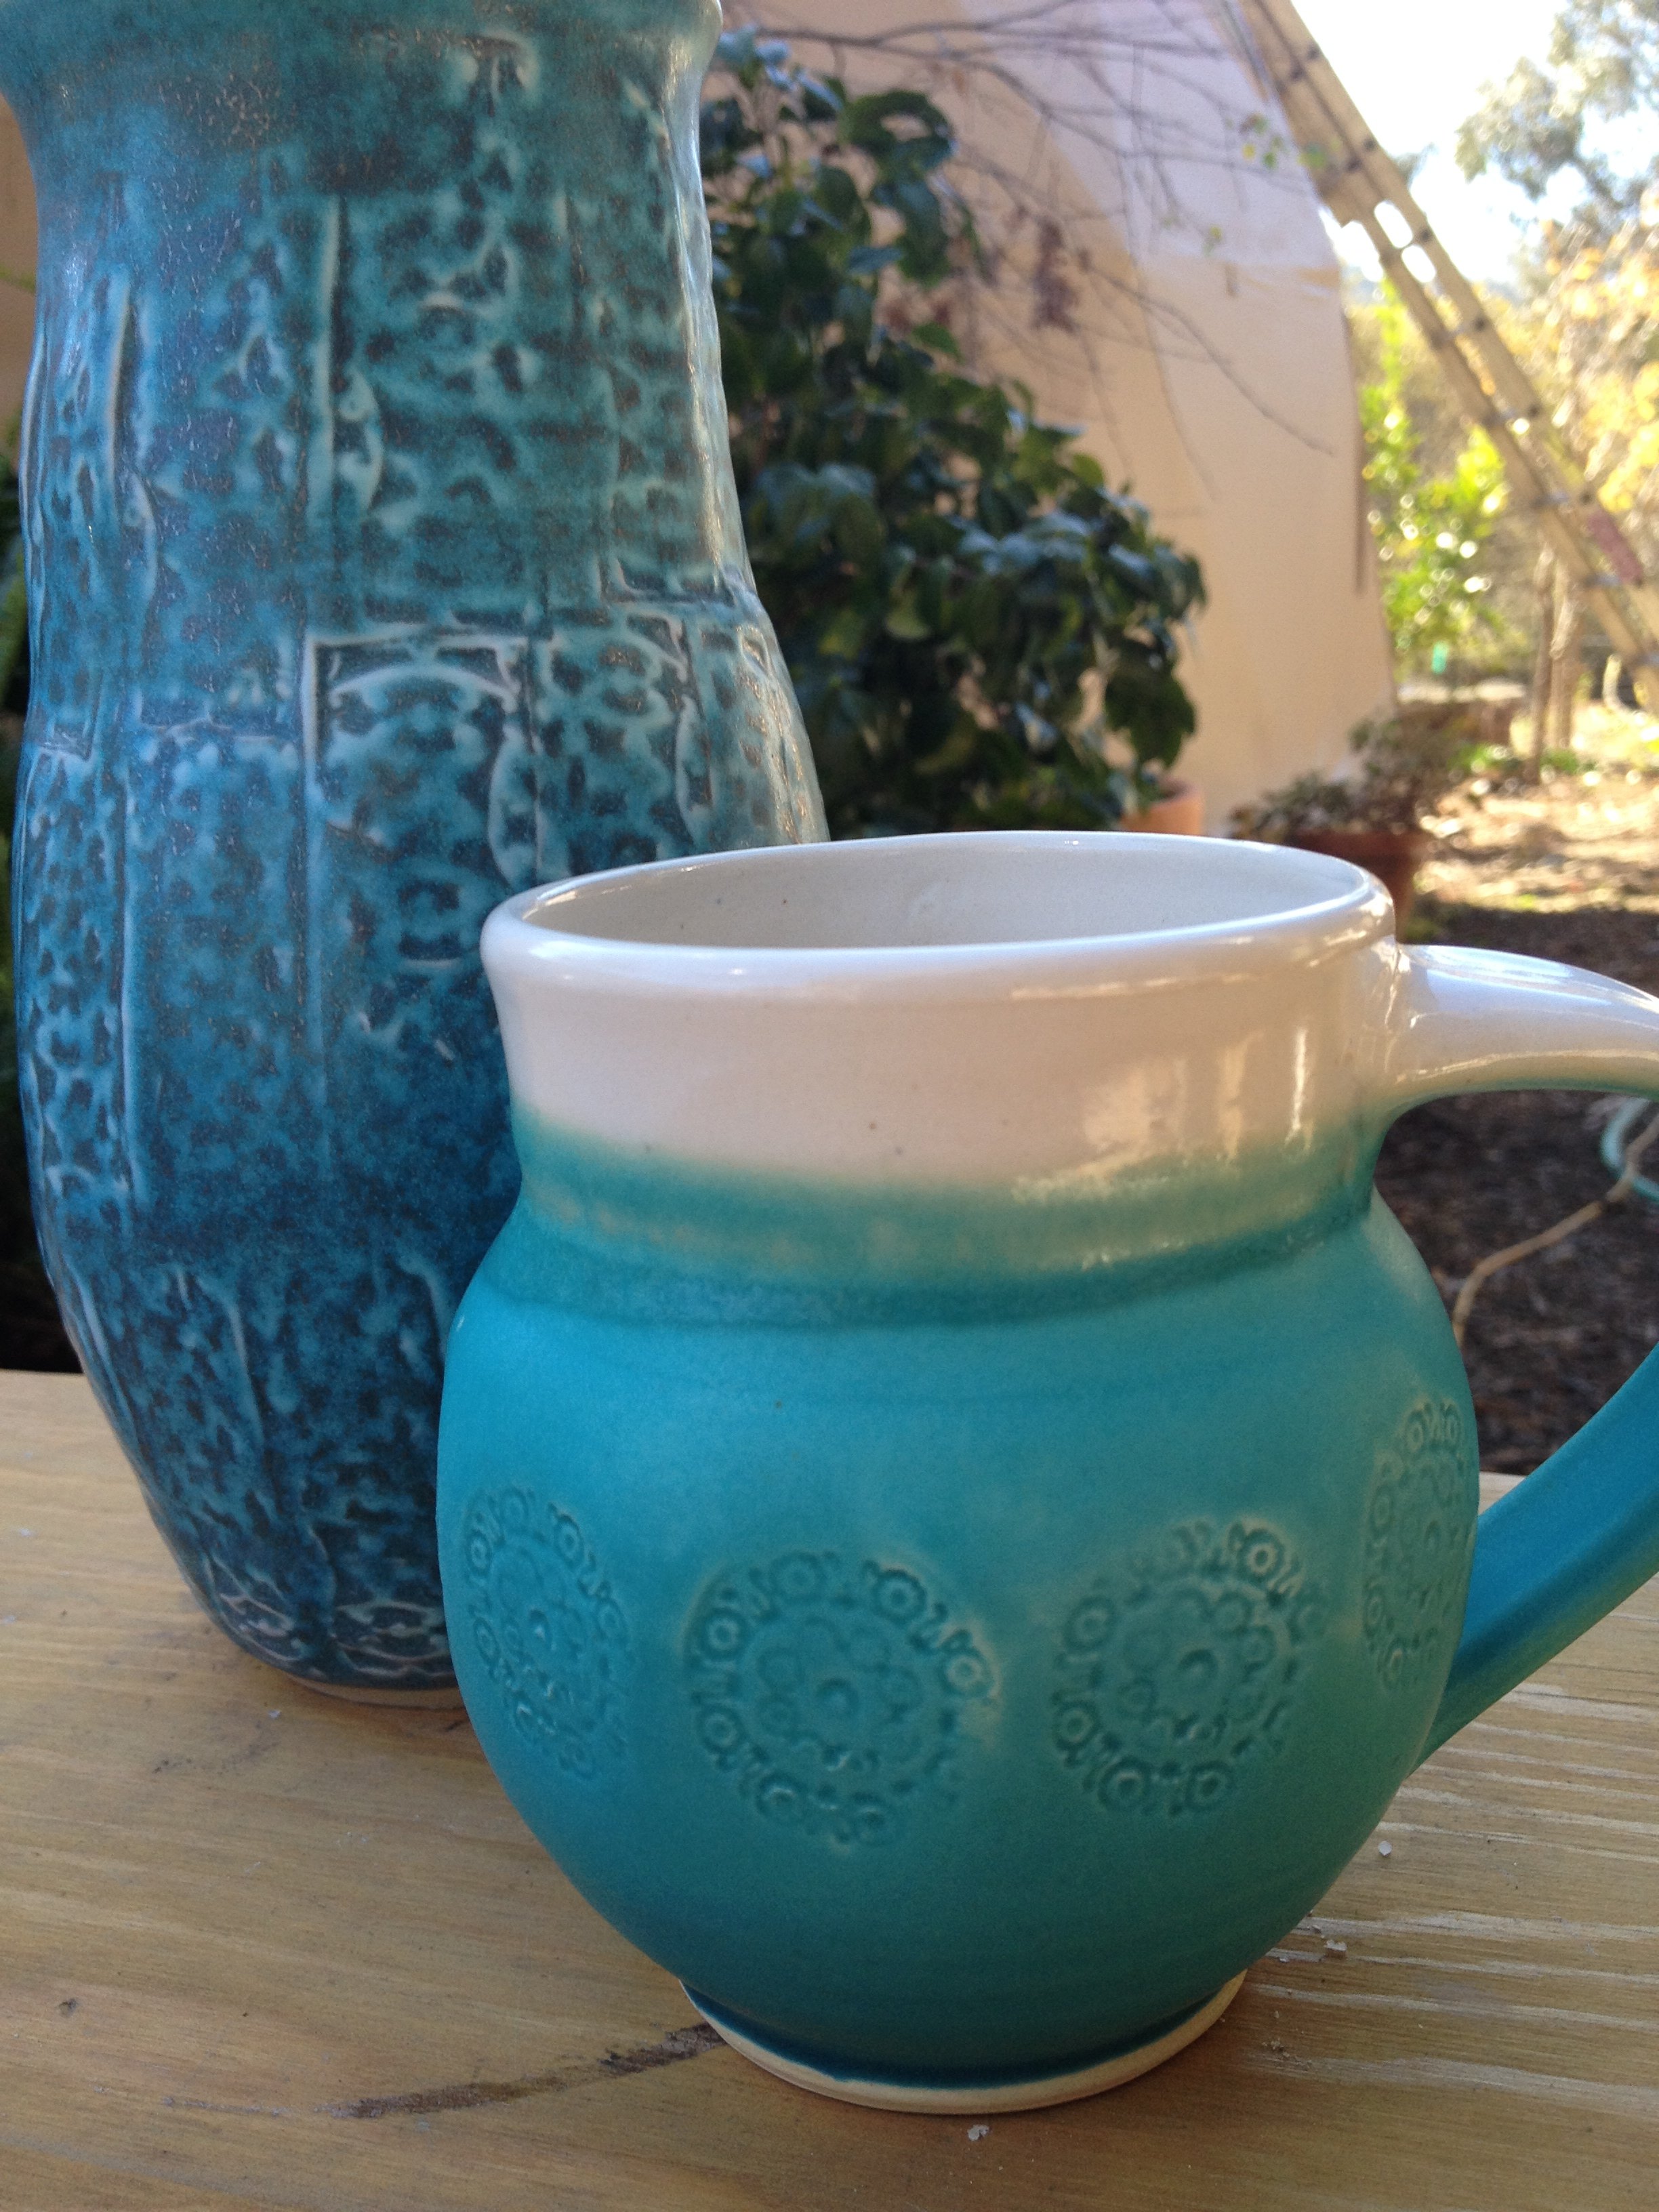 Indo-inspired vase & mug